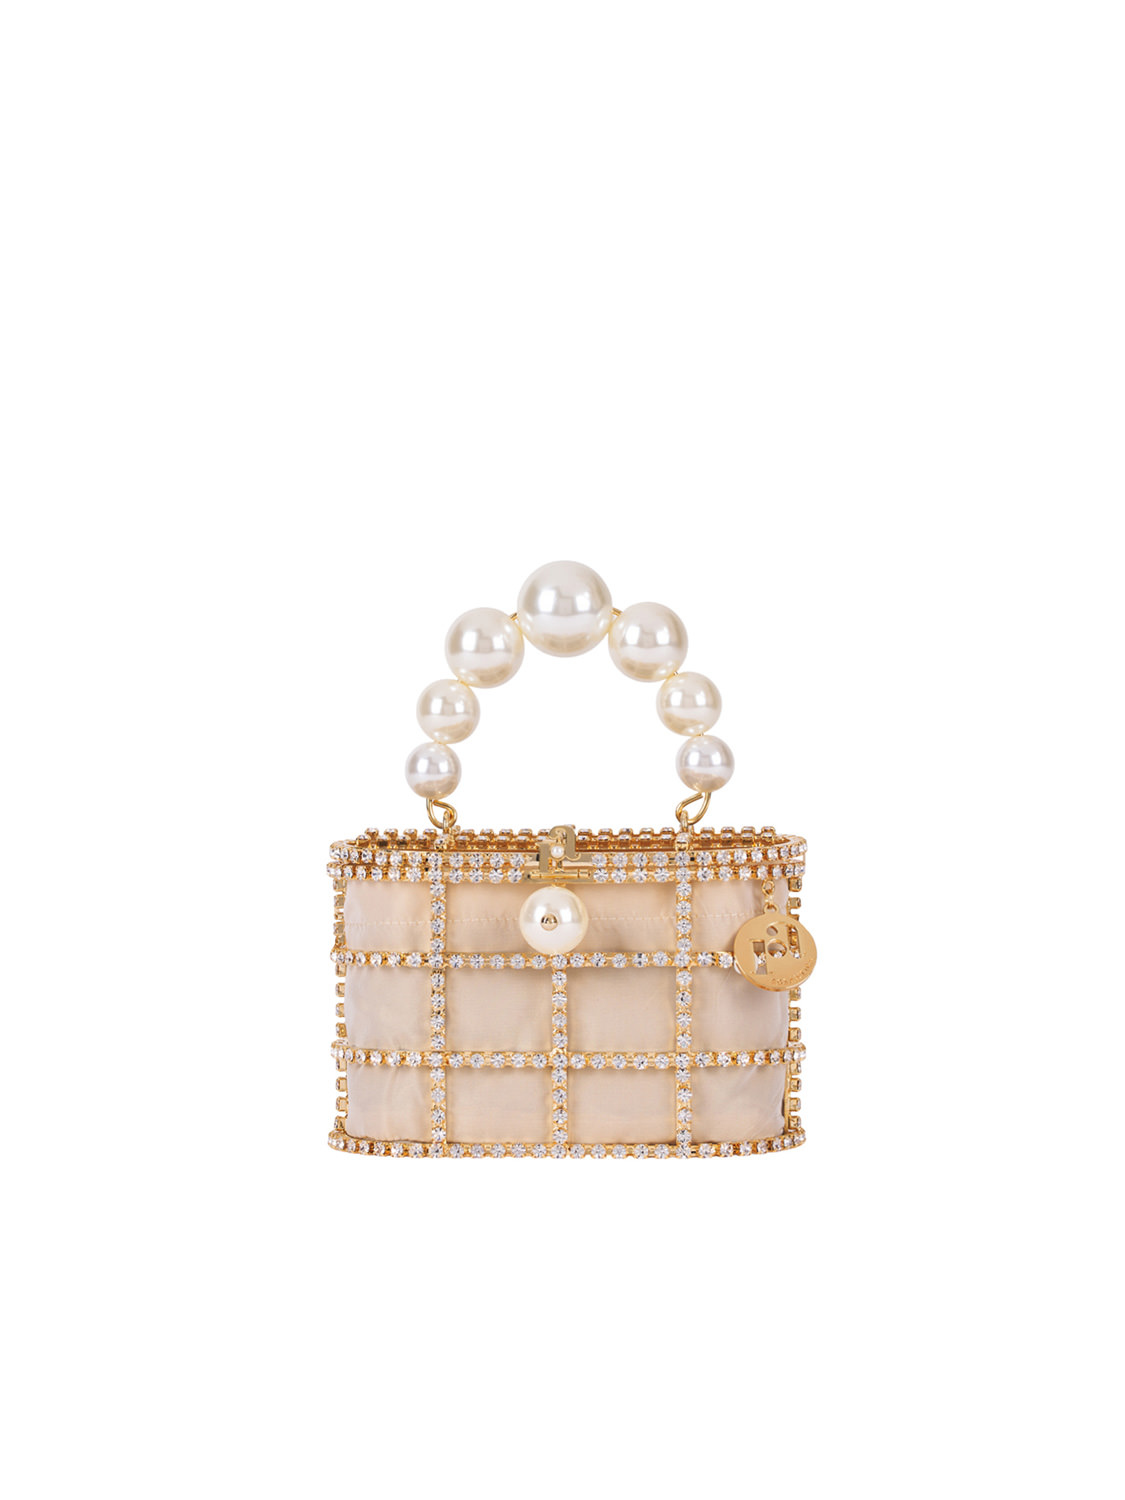 Chanel Crystal Bag - 60 For Sale on 1stDibs  chanel bag with stones, chanel  crystal logo bag, chanel crystal le boy bag